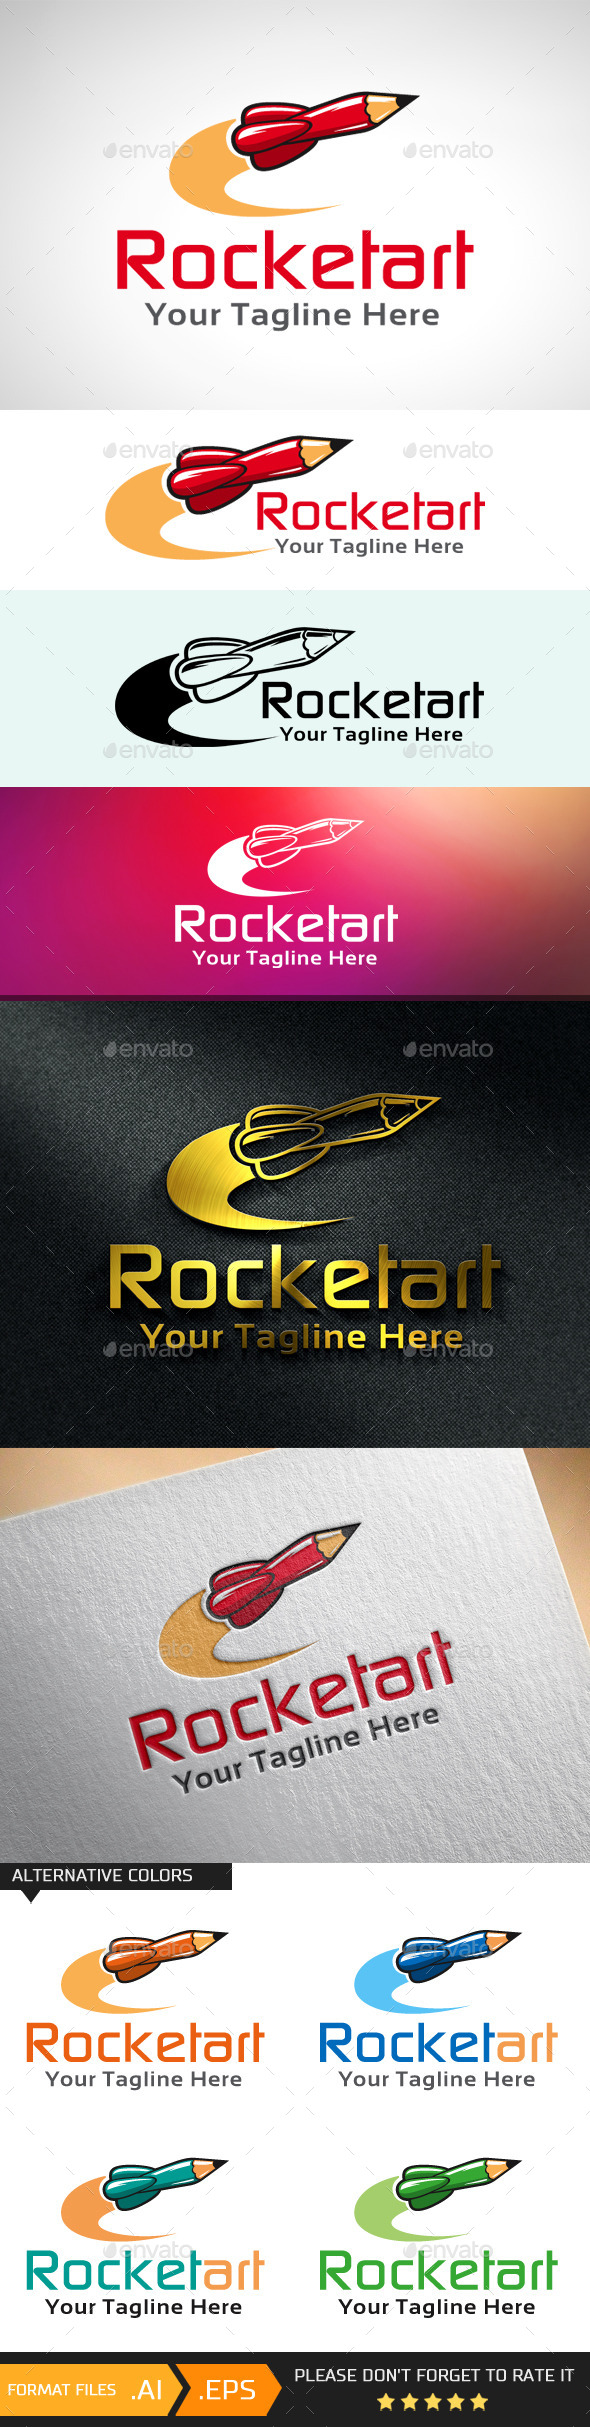 Rocket Art Creative Logo Template